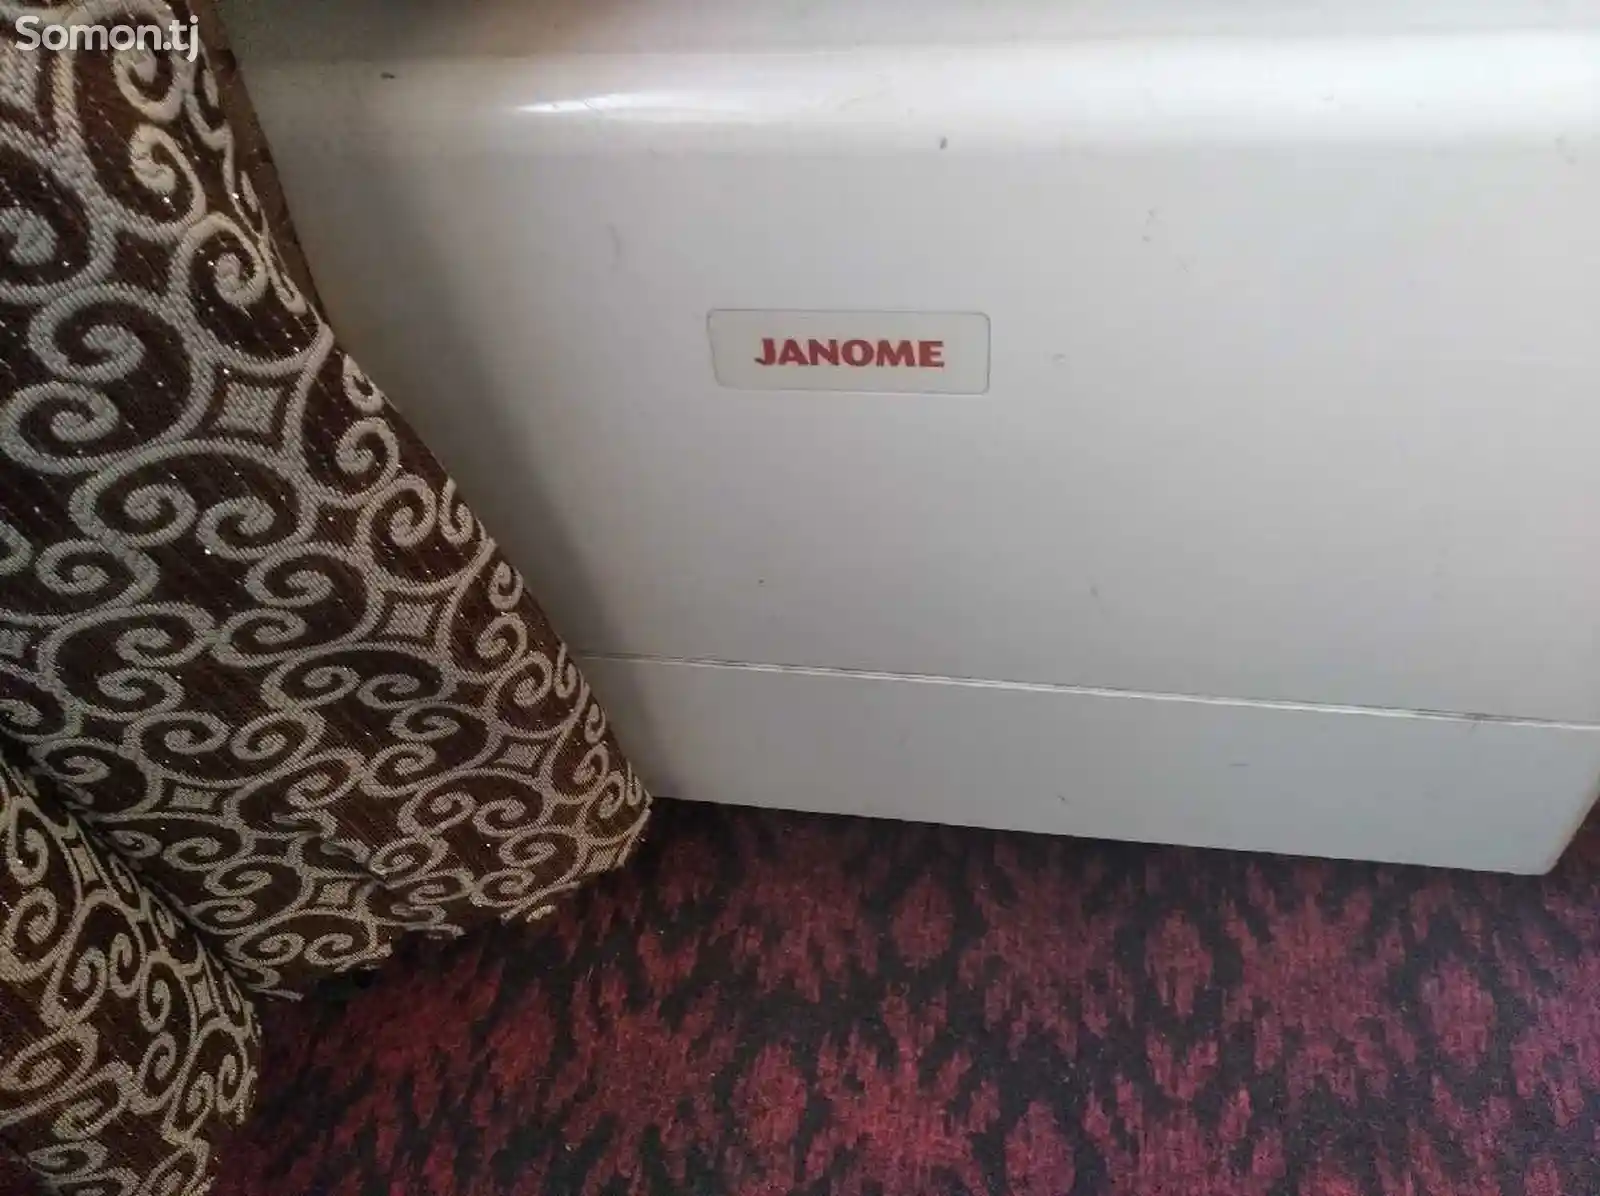 швейная машинка Janome